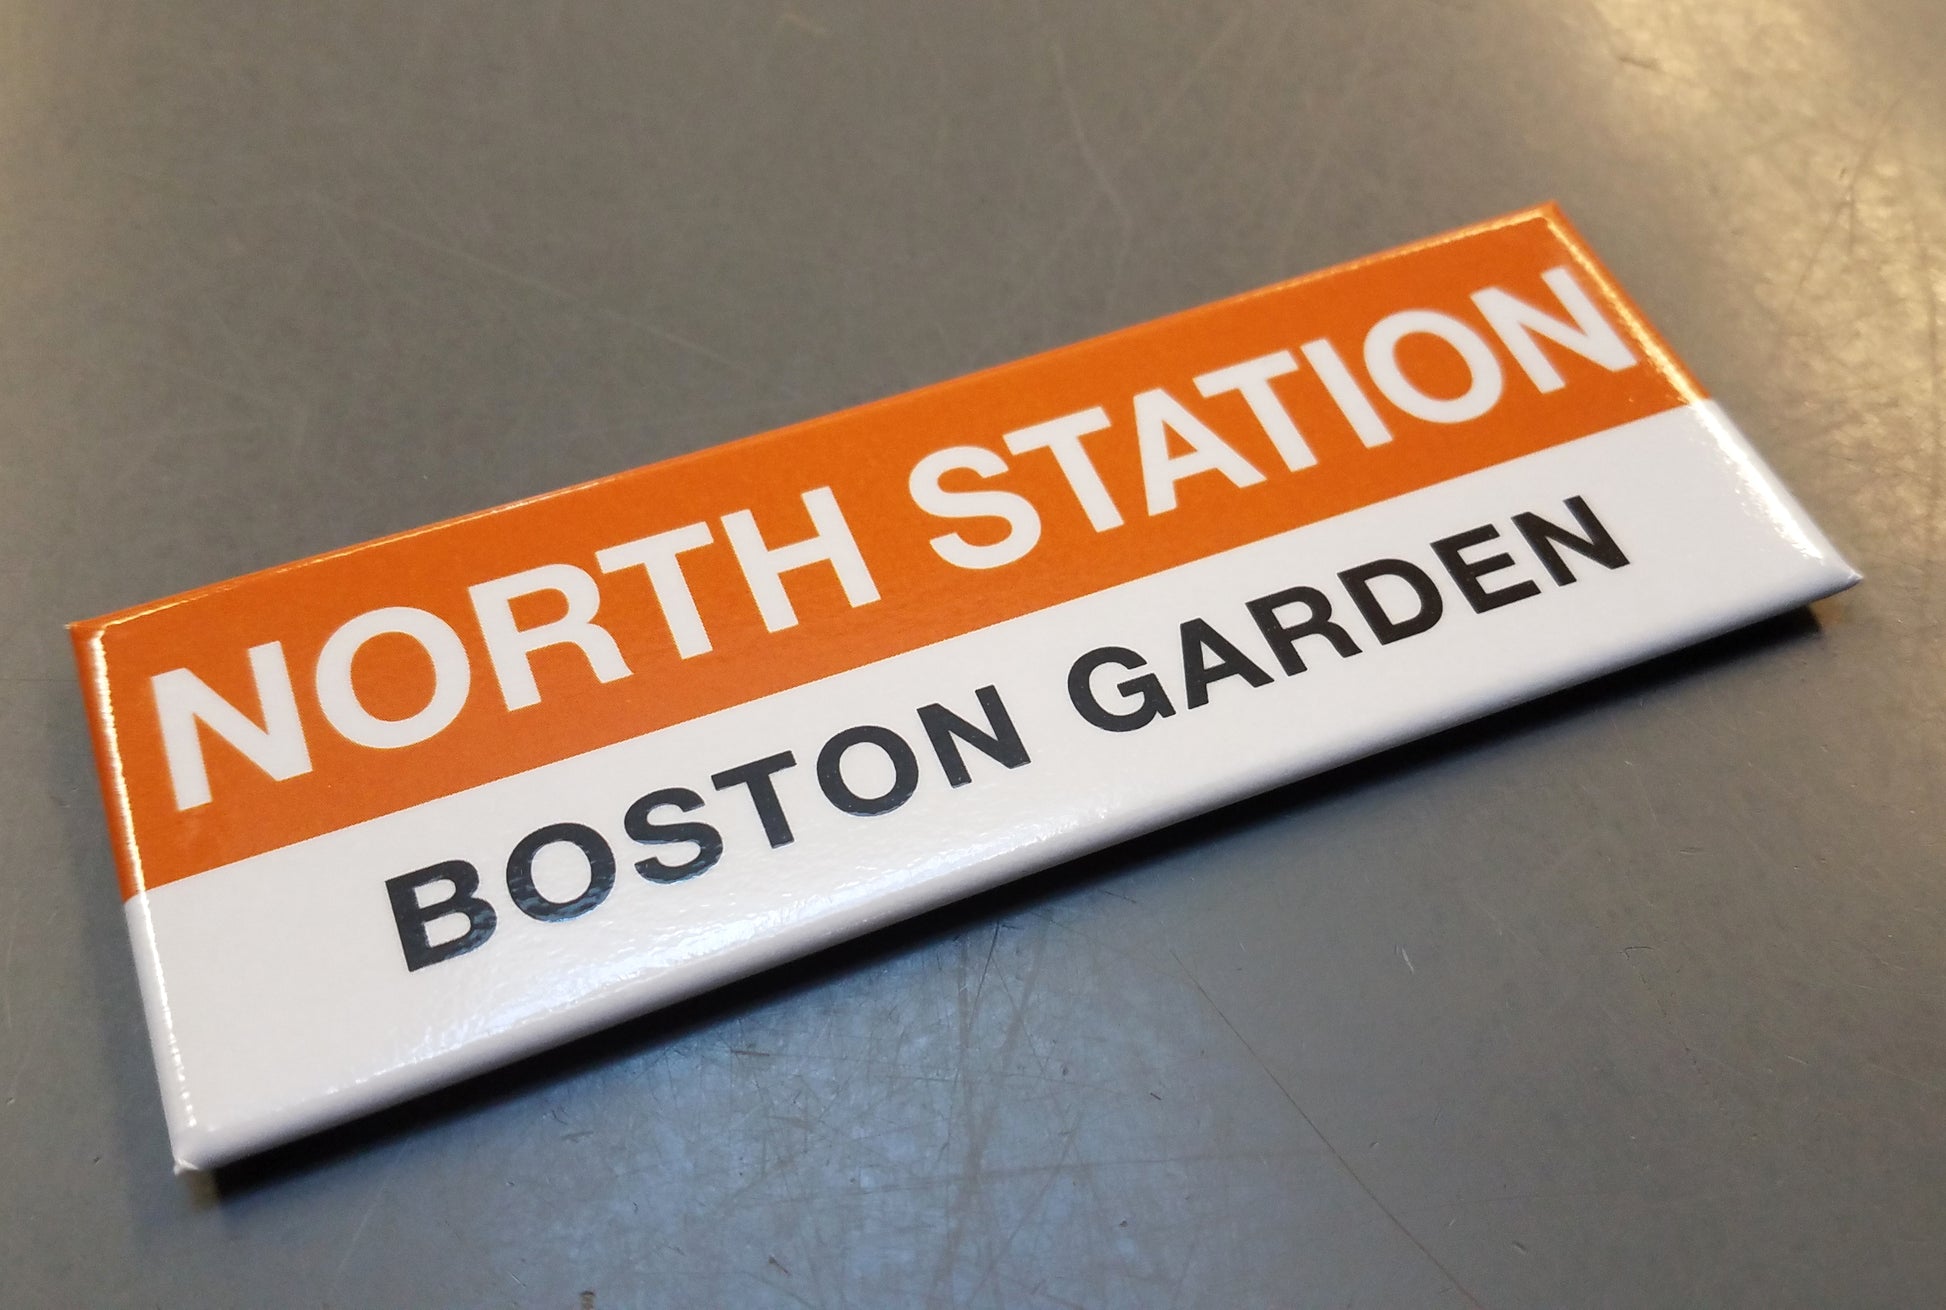 Orange Line Station Magnet: North Station; Boston Garden